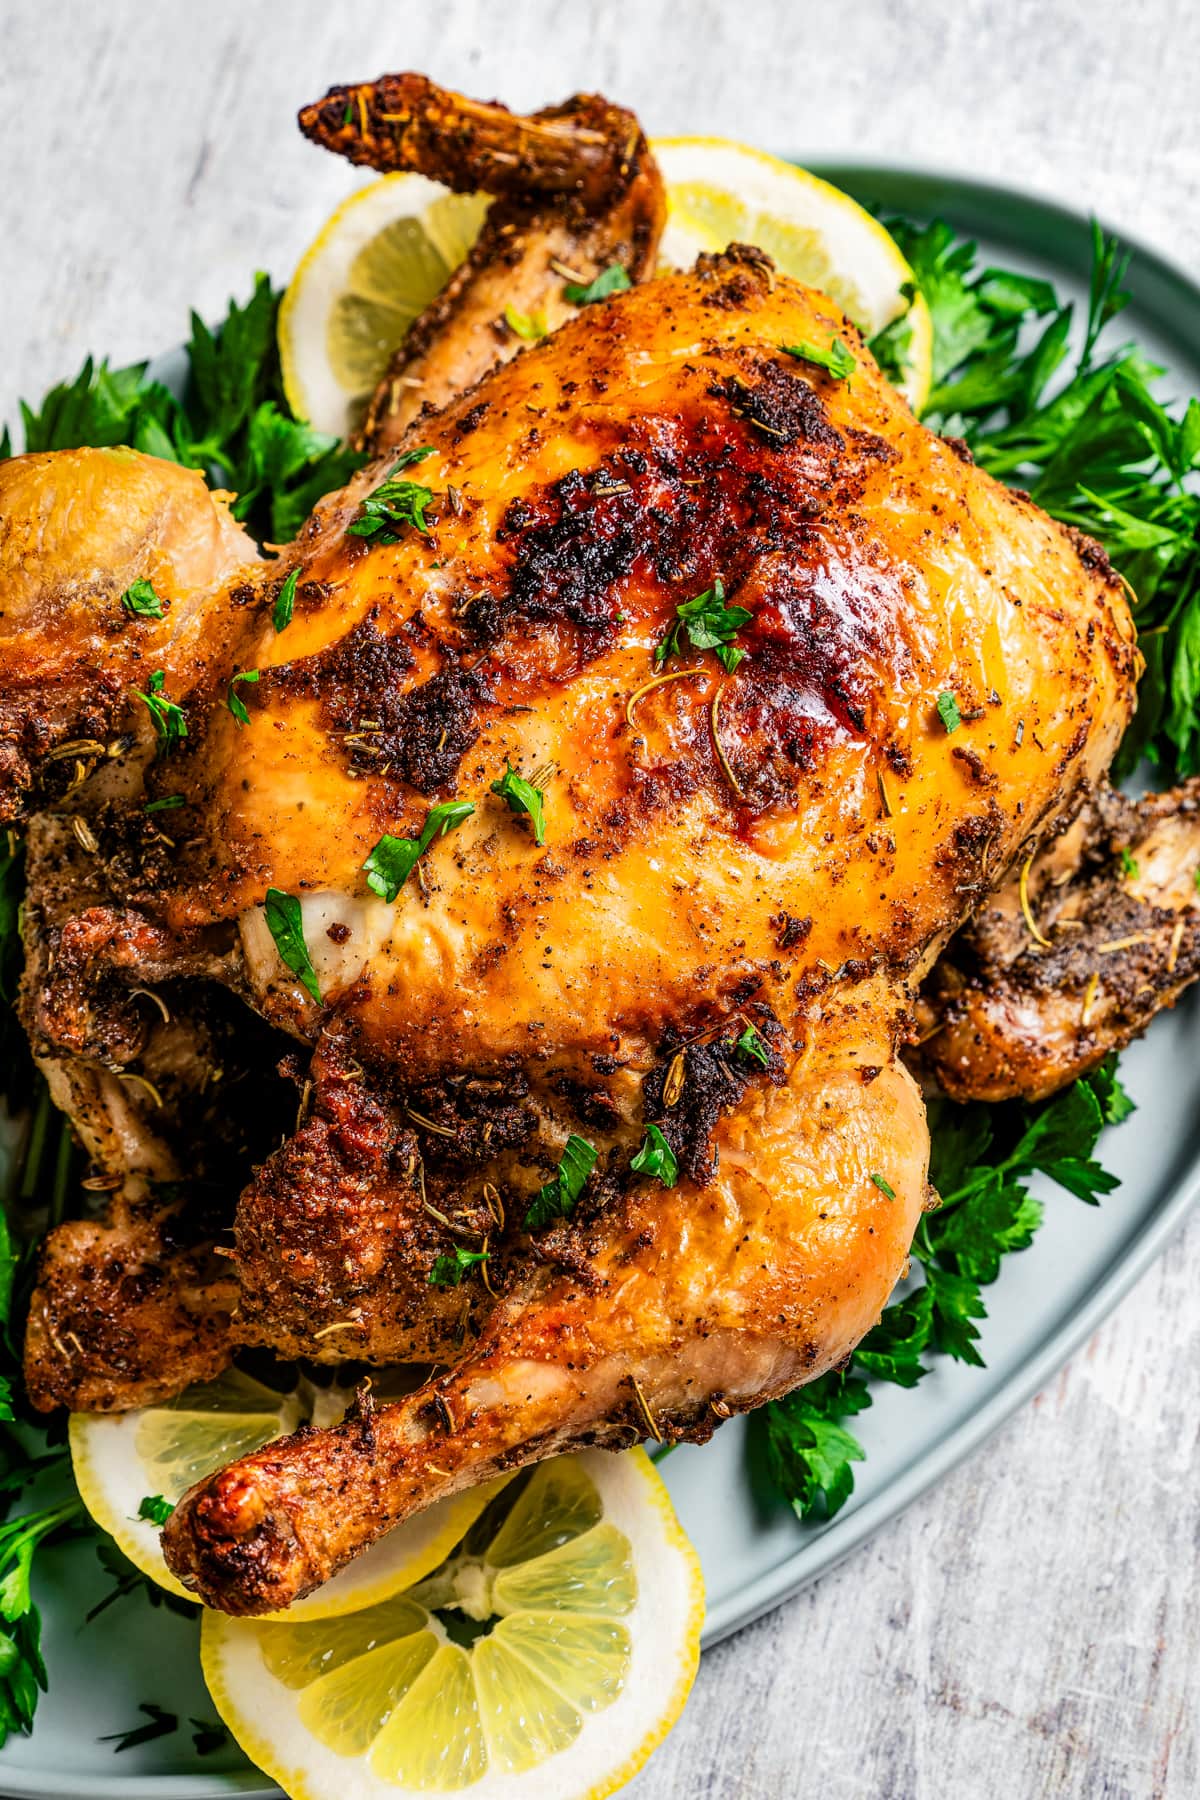 Image of air fryer rotisserie chicken on a serving platter over fresh herbs and lemon.